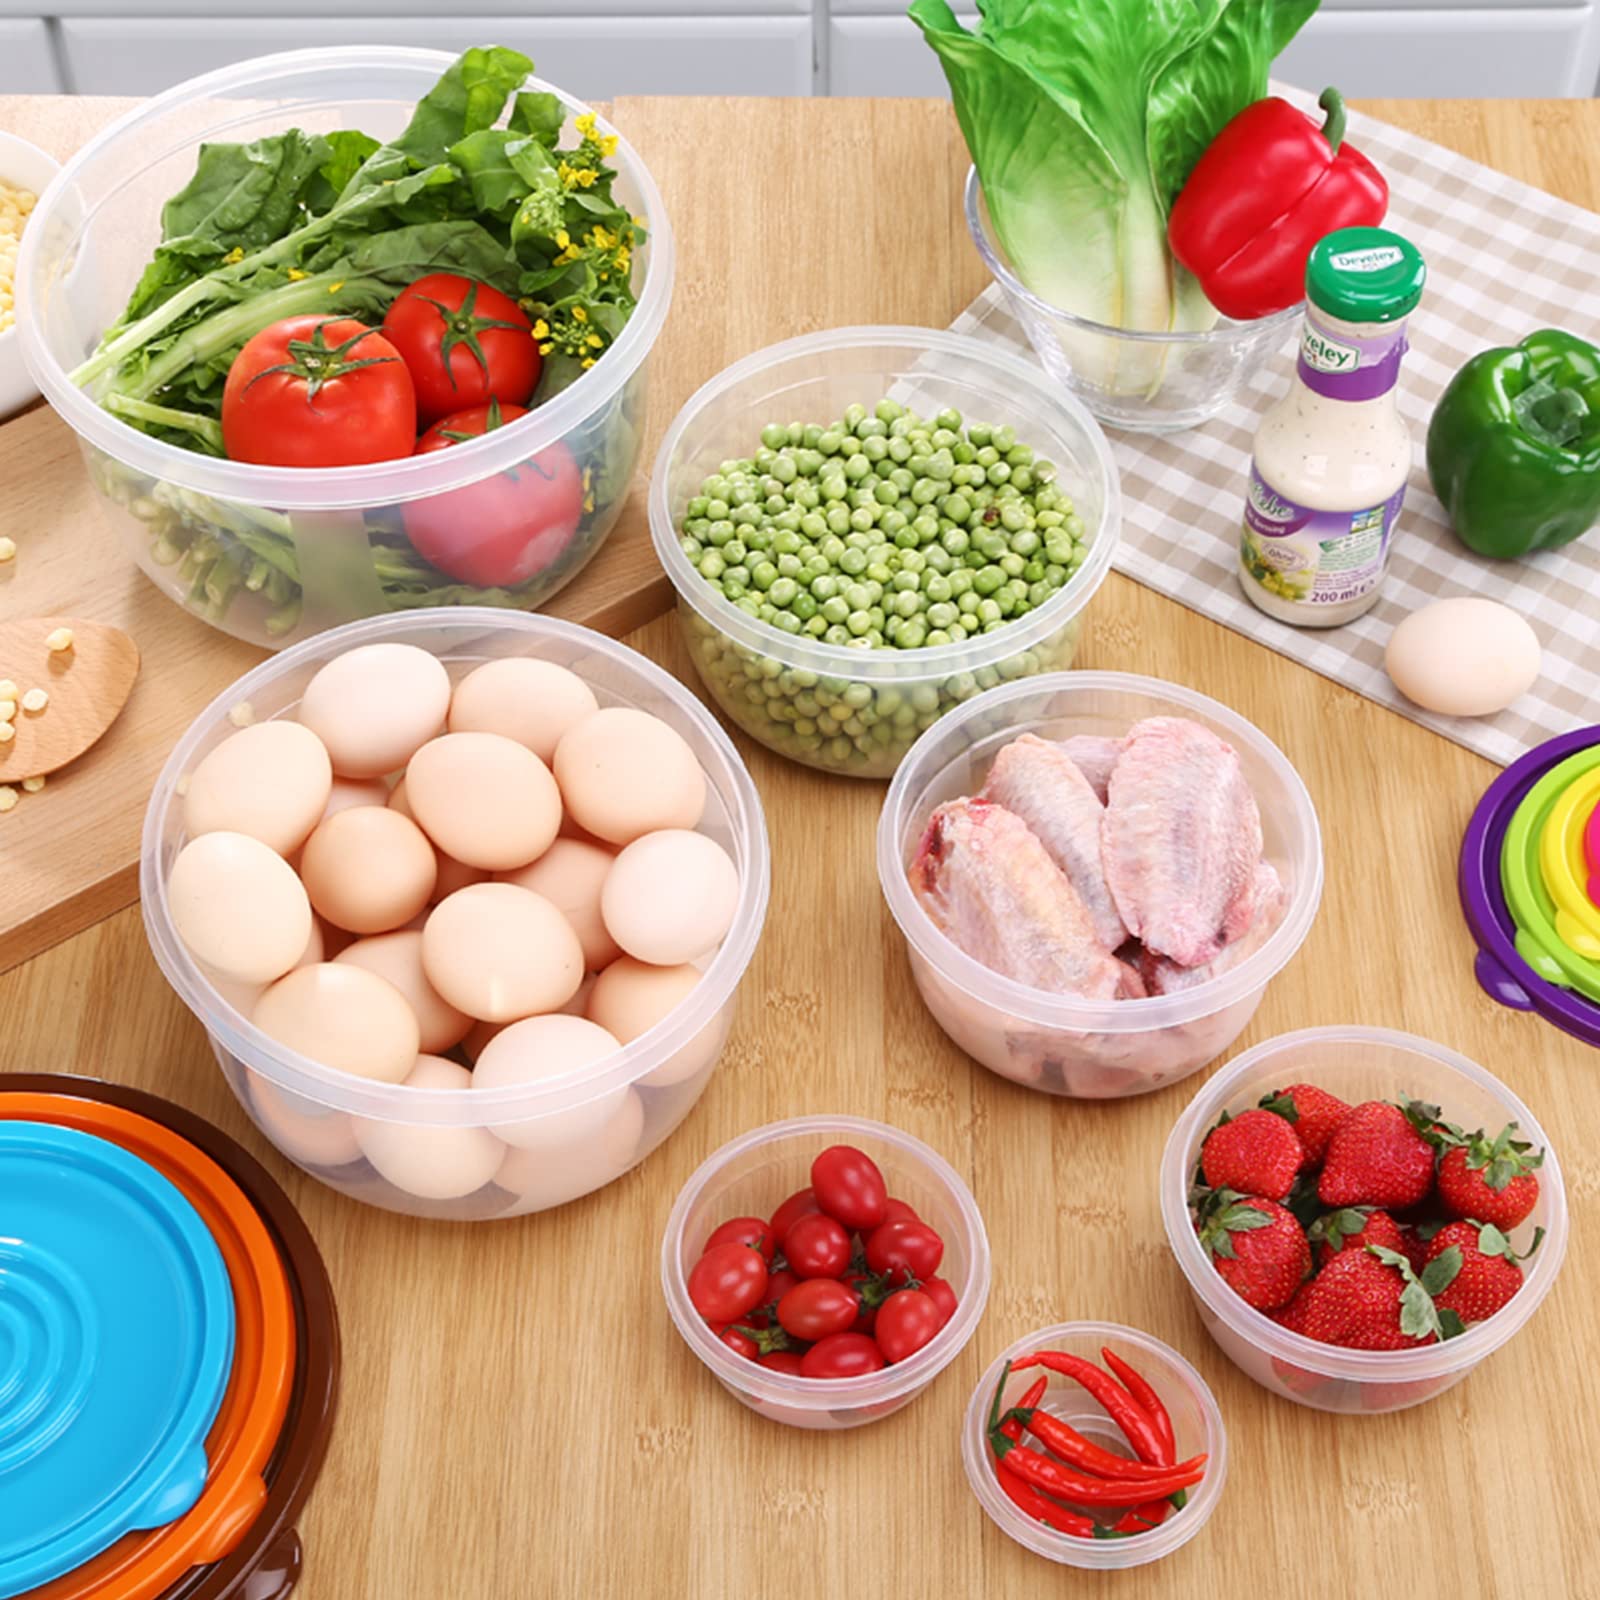 ATRDTO Plastic Multicolor Salad Bowl Set,Microwave and Dishwasher Safe,Ideal for Baking, Prepping, Cooking and Serving Food (Set of 7) (Multicolor-Round)